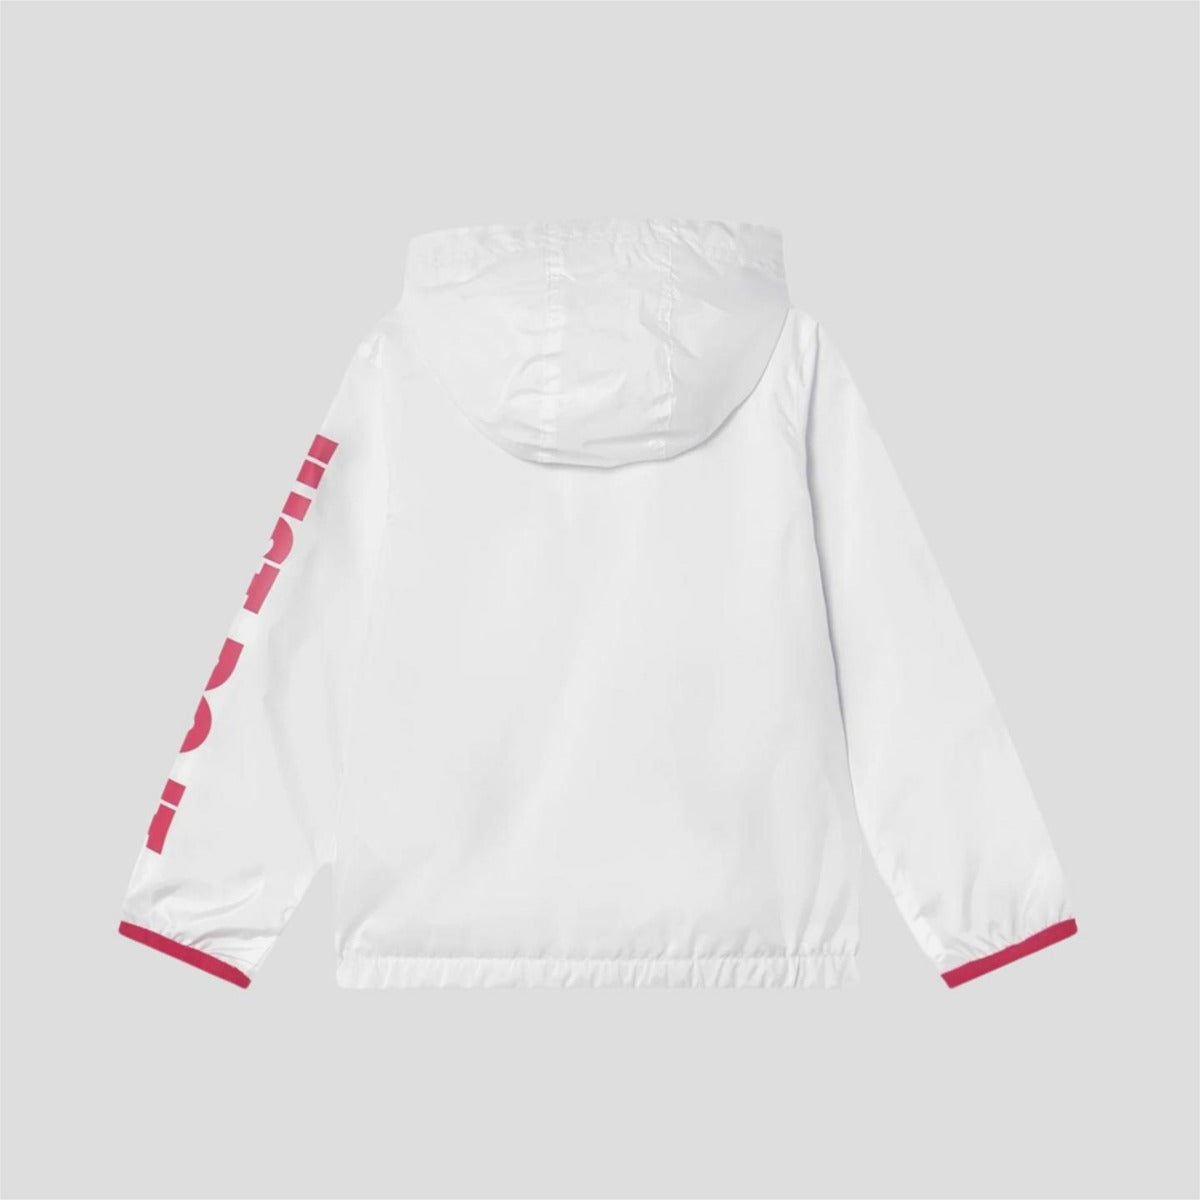 Veste Capuche Nike Enfant - Blanc/Noir/Rose